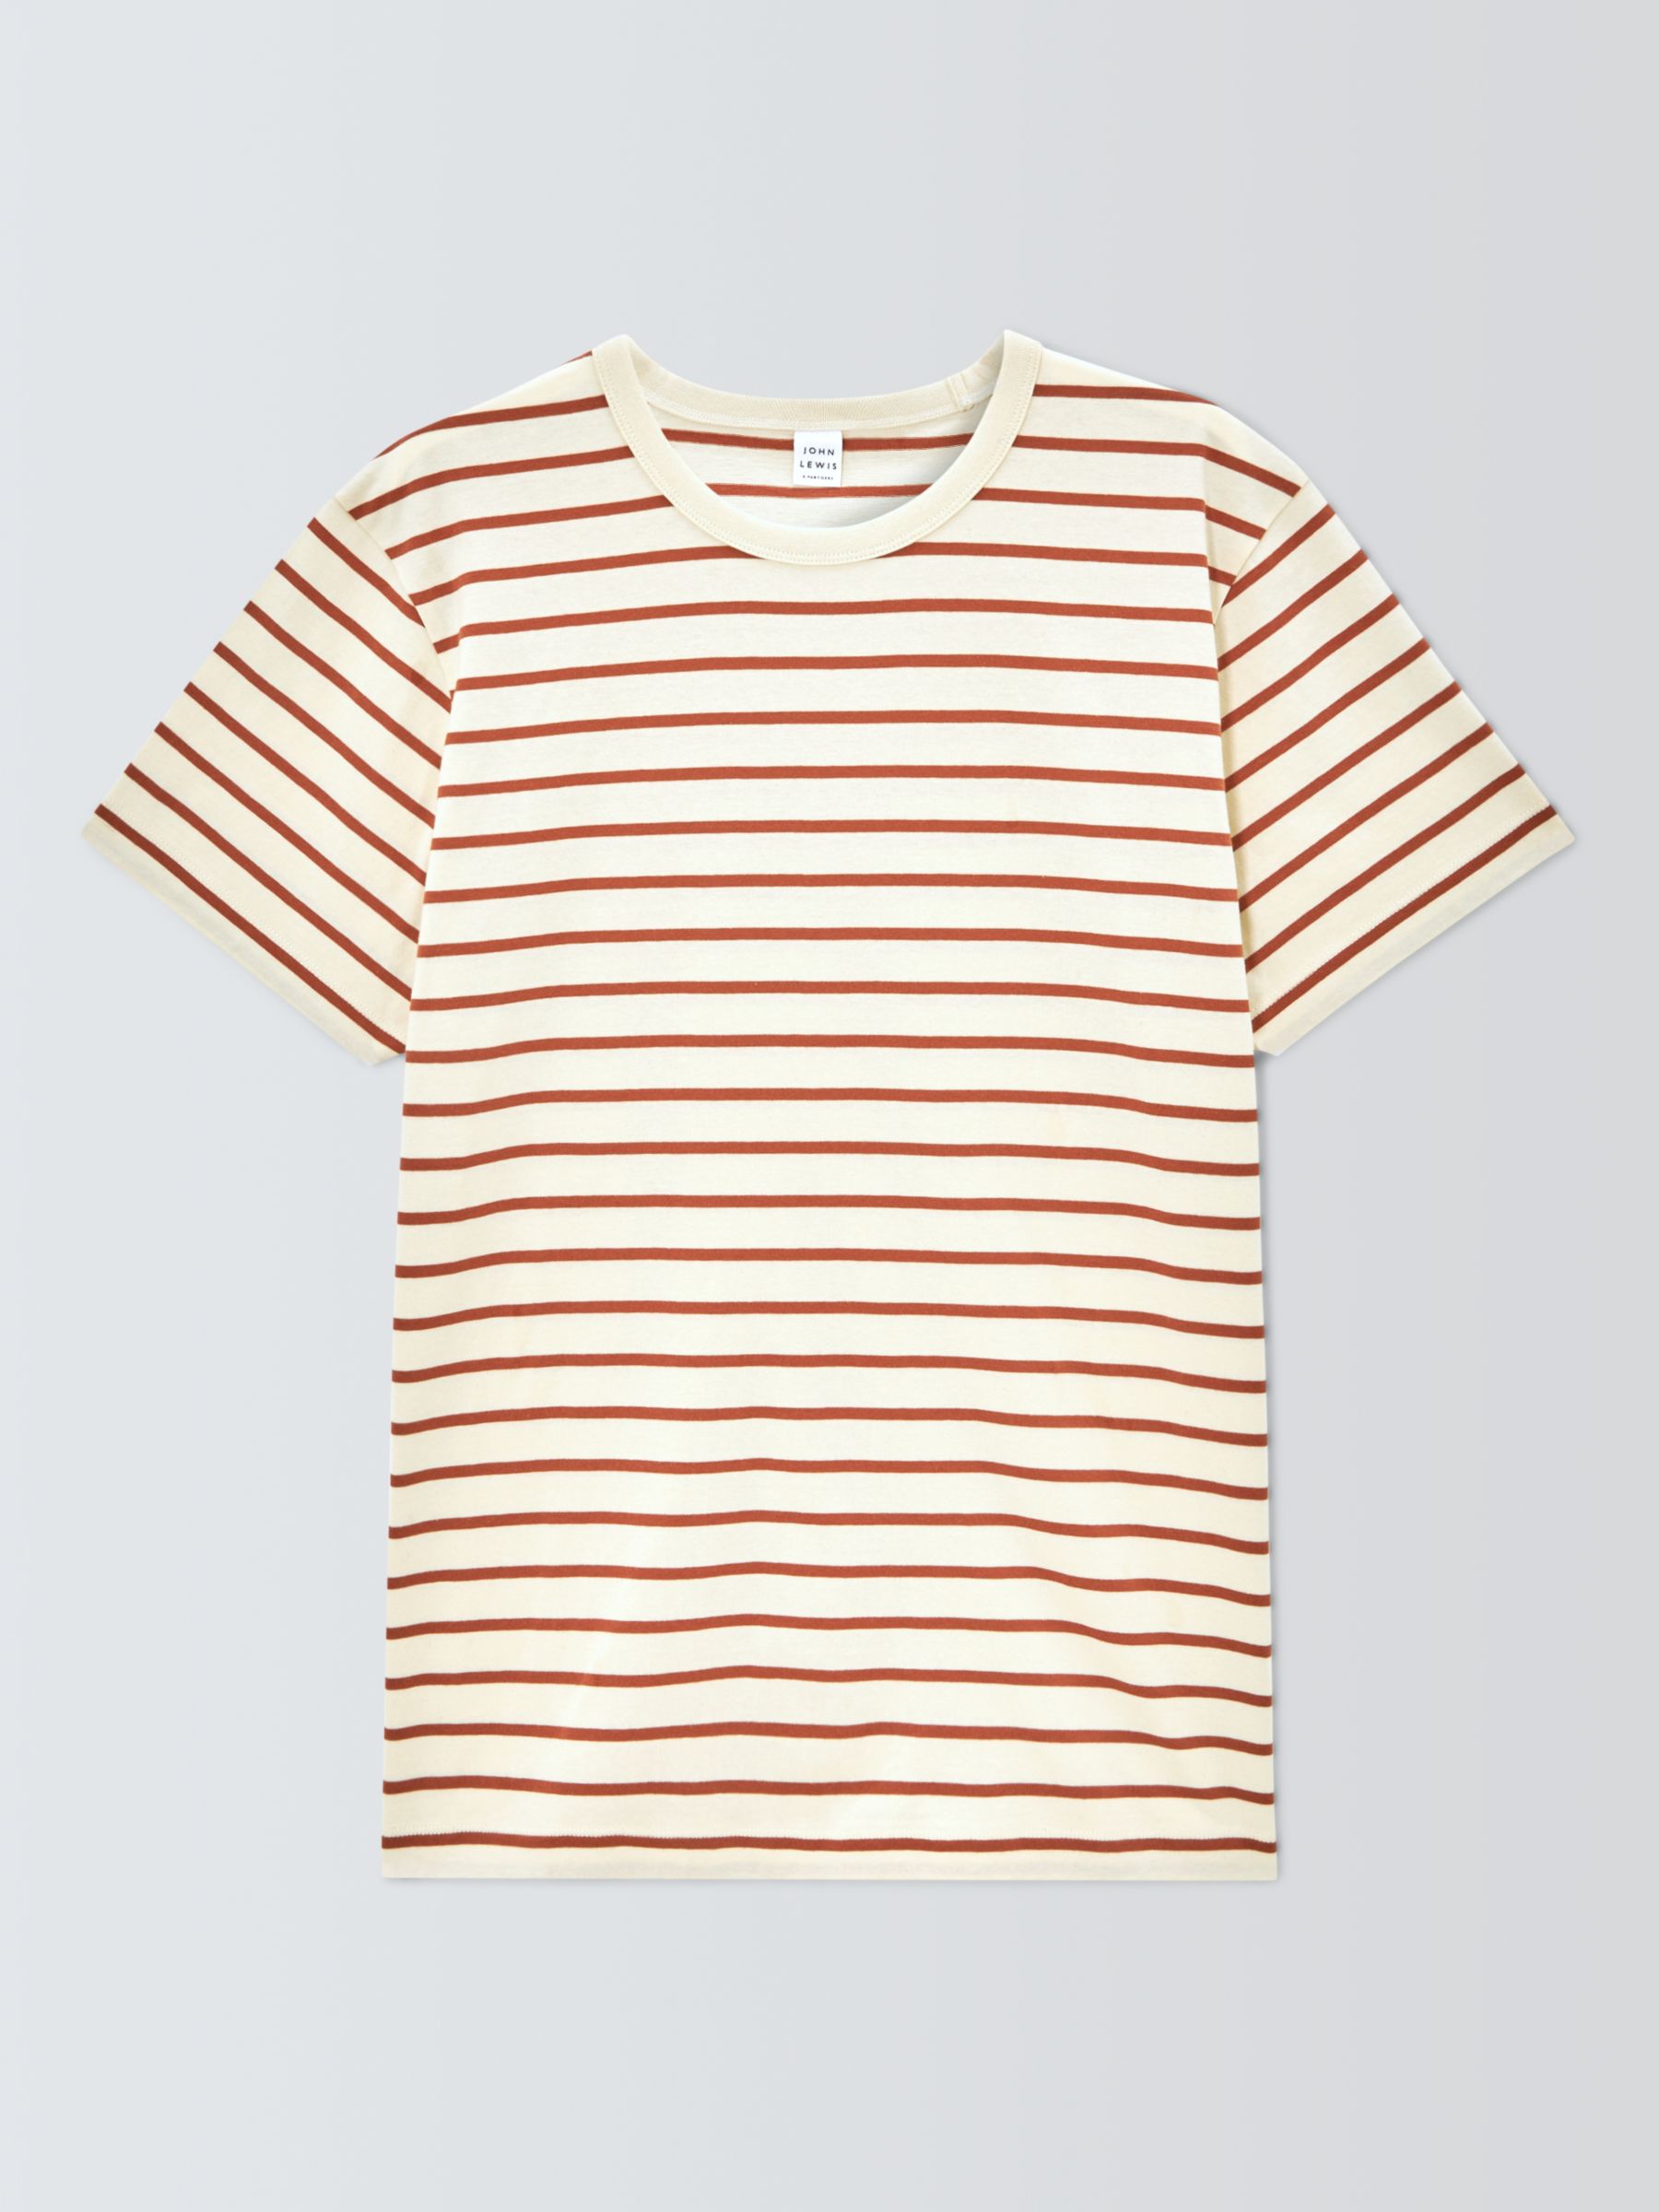 Superdry Vintage City Souvenir T-Shirt, Orange Marl at John Lewis & Partners